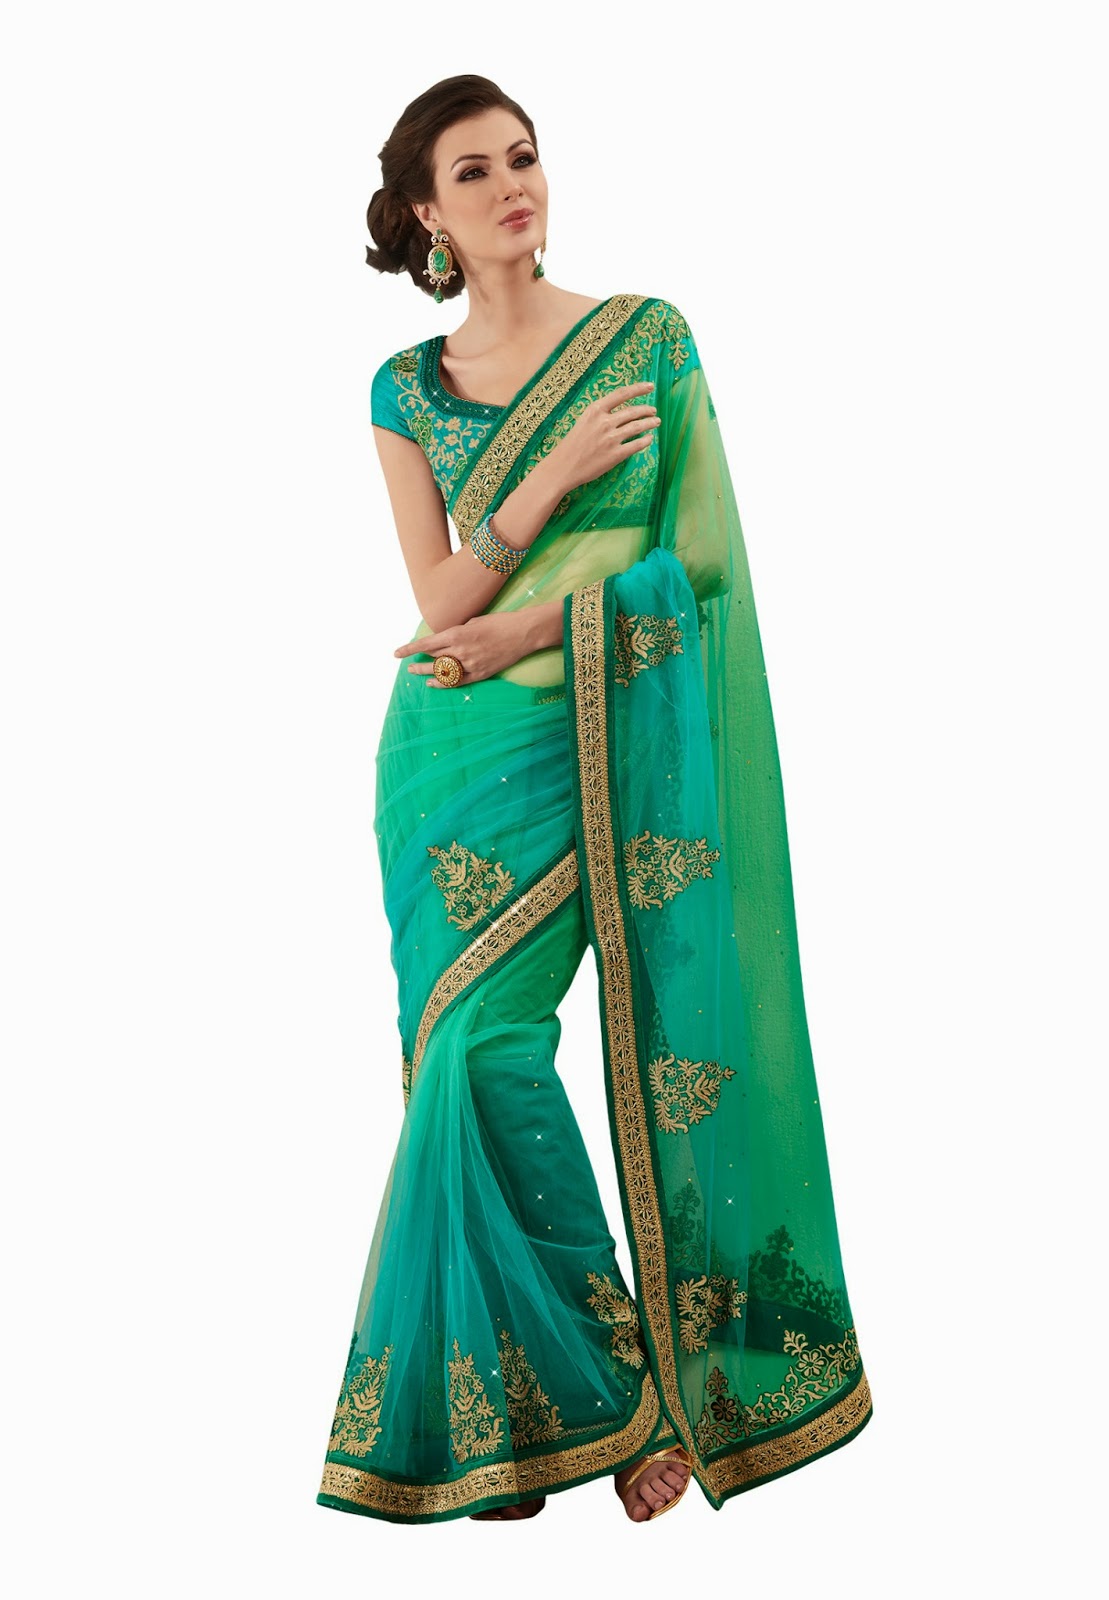 http://www.amazon.com/Indian-Designer-Wear-Embroidered-Saree/dp/B00J0V1DII